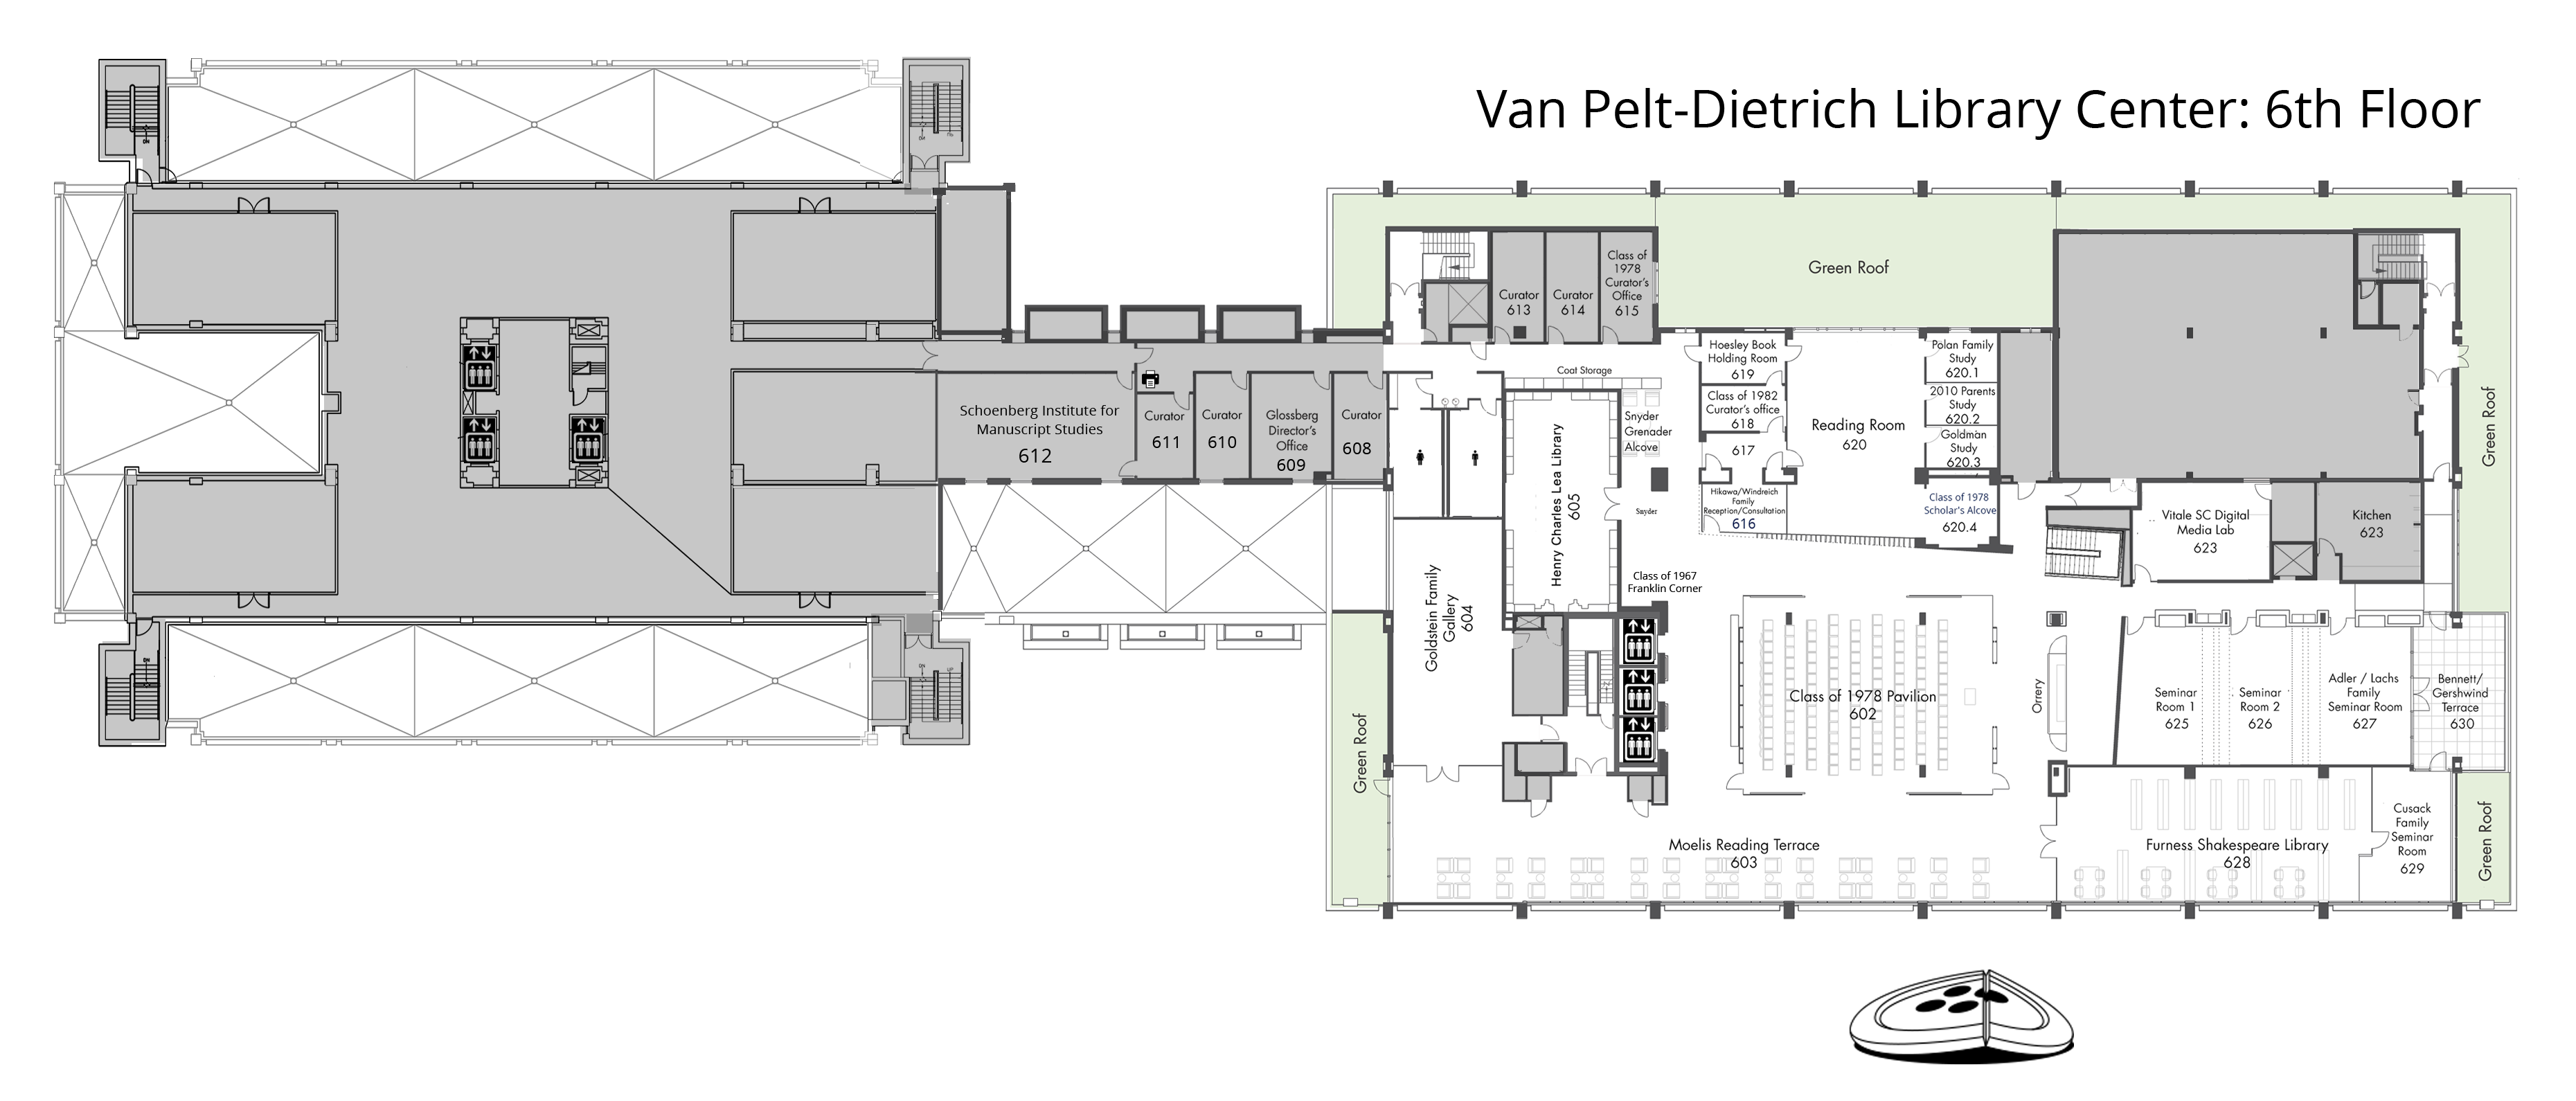 Van Pelt-Dietrich Library Center, sixth floor plan